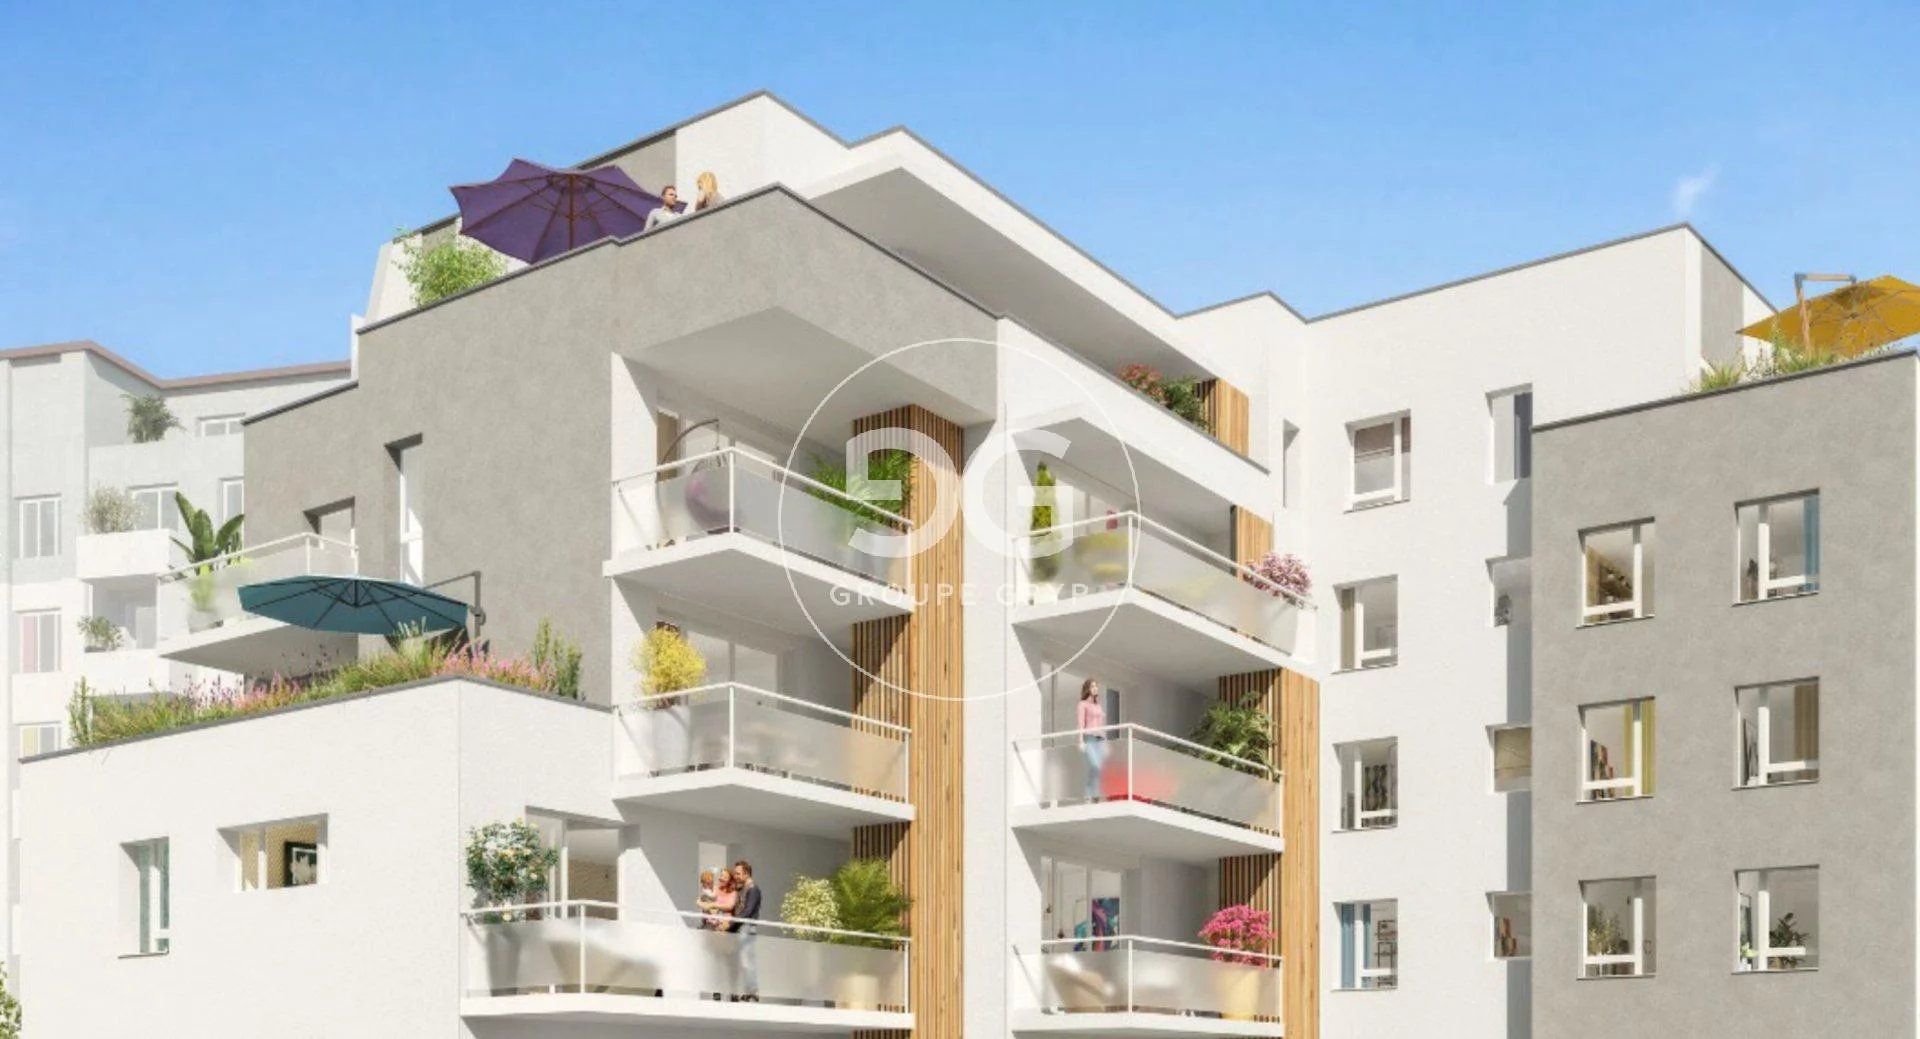 Sale Apartment - Grenoble Capuche